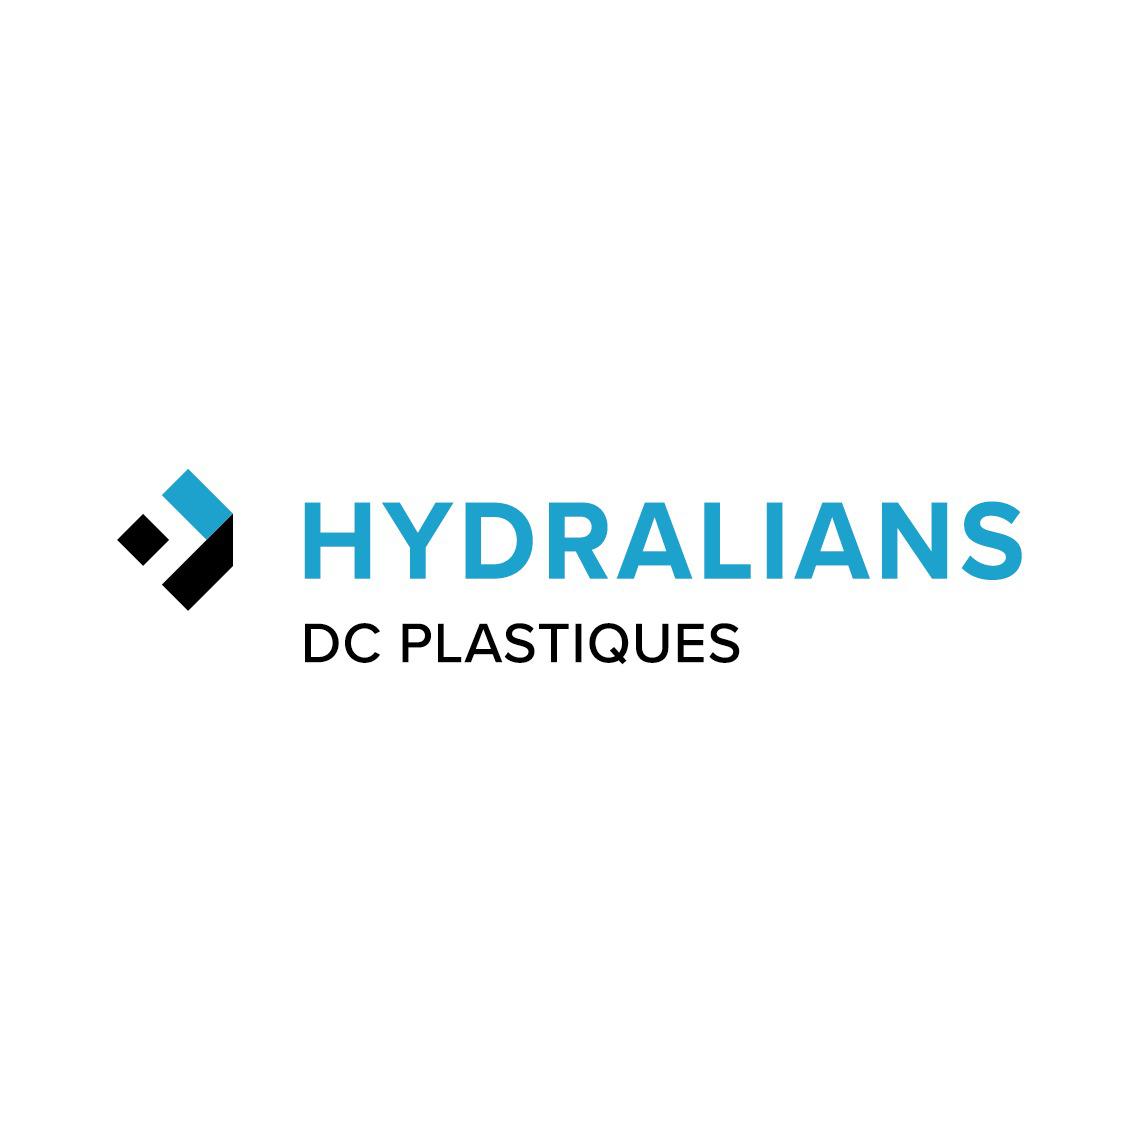 HYDRALIANS DC PLASTIQUES Bègles Logo